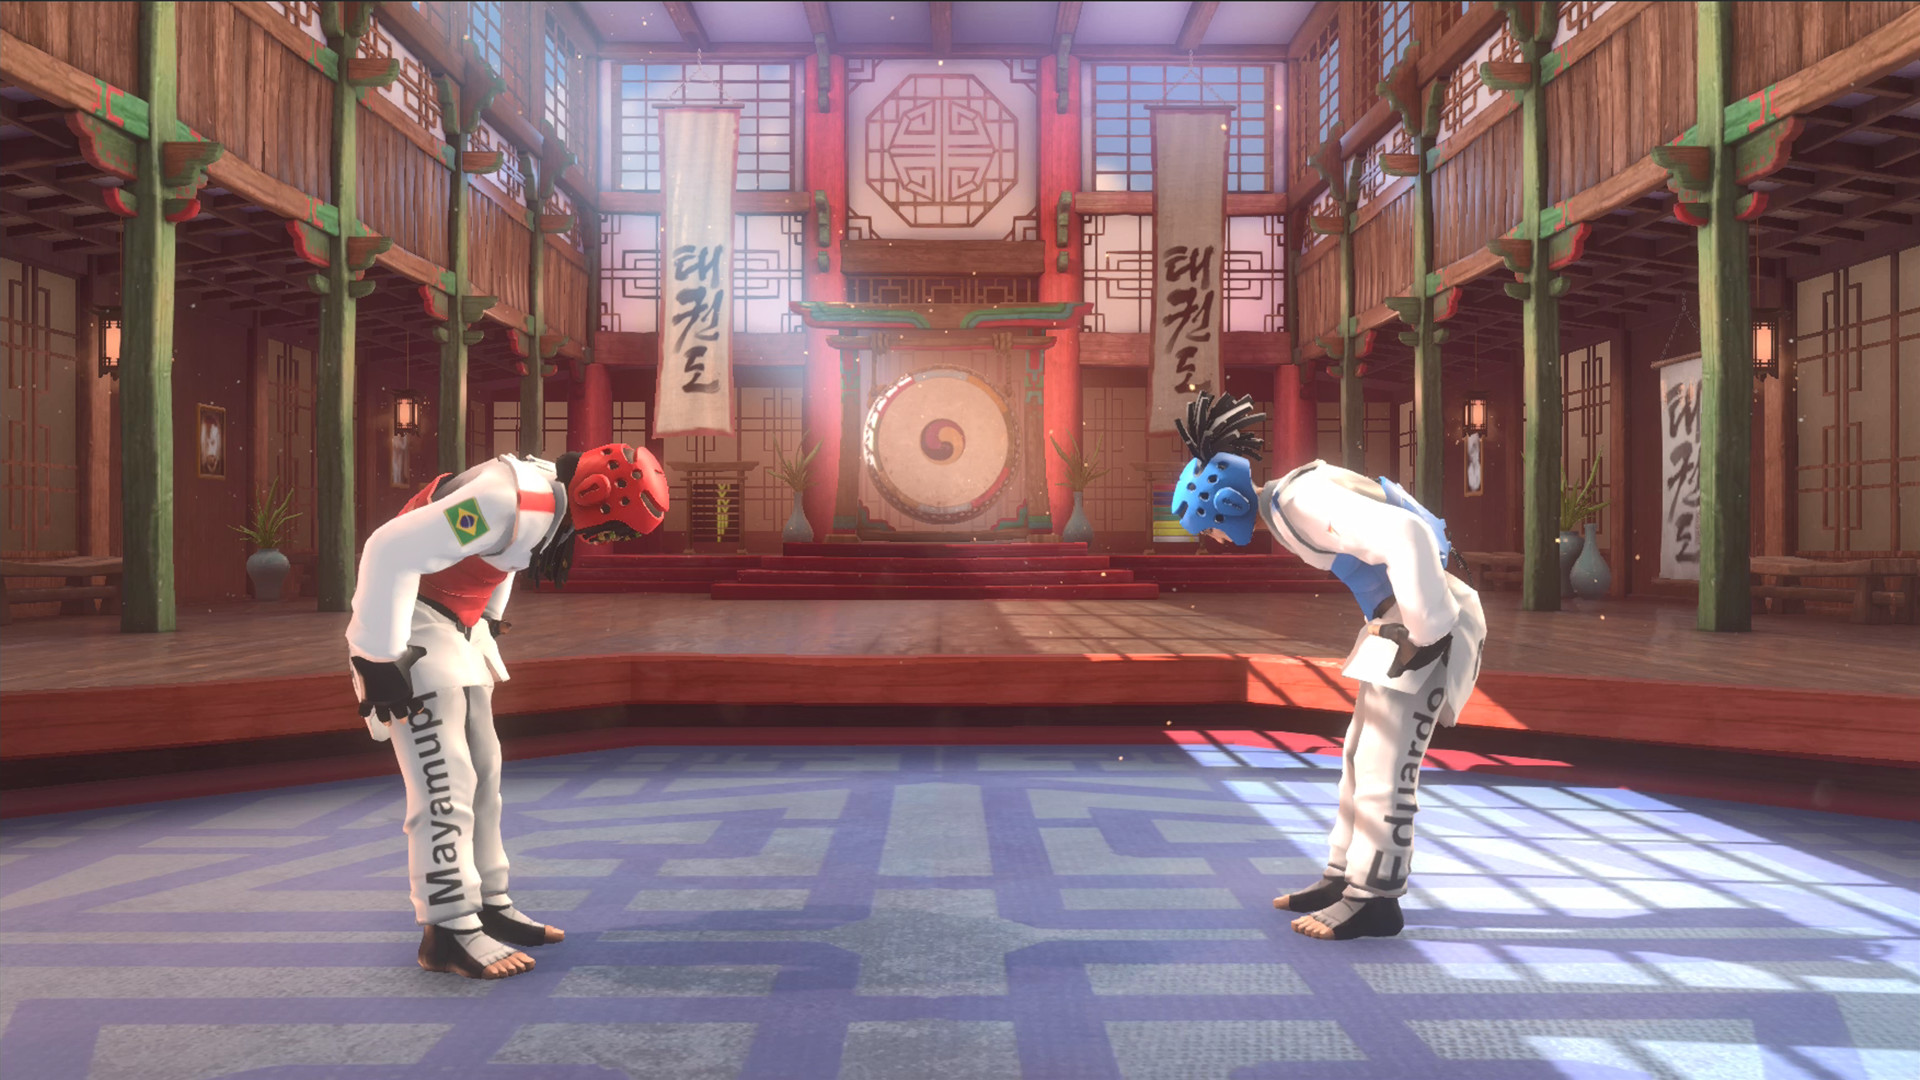 Taekwondo Grand Prix screenshot